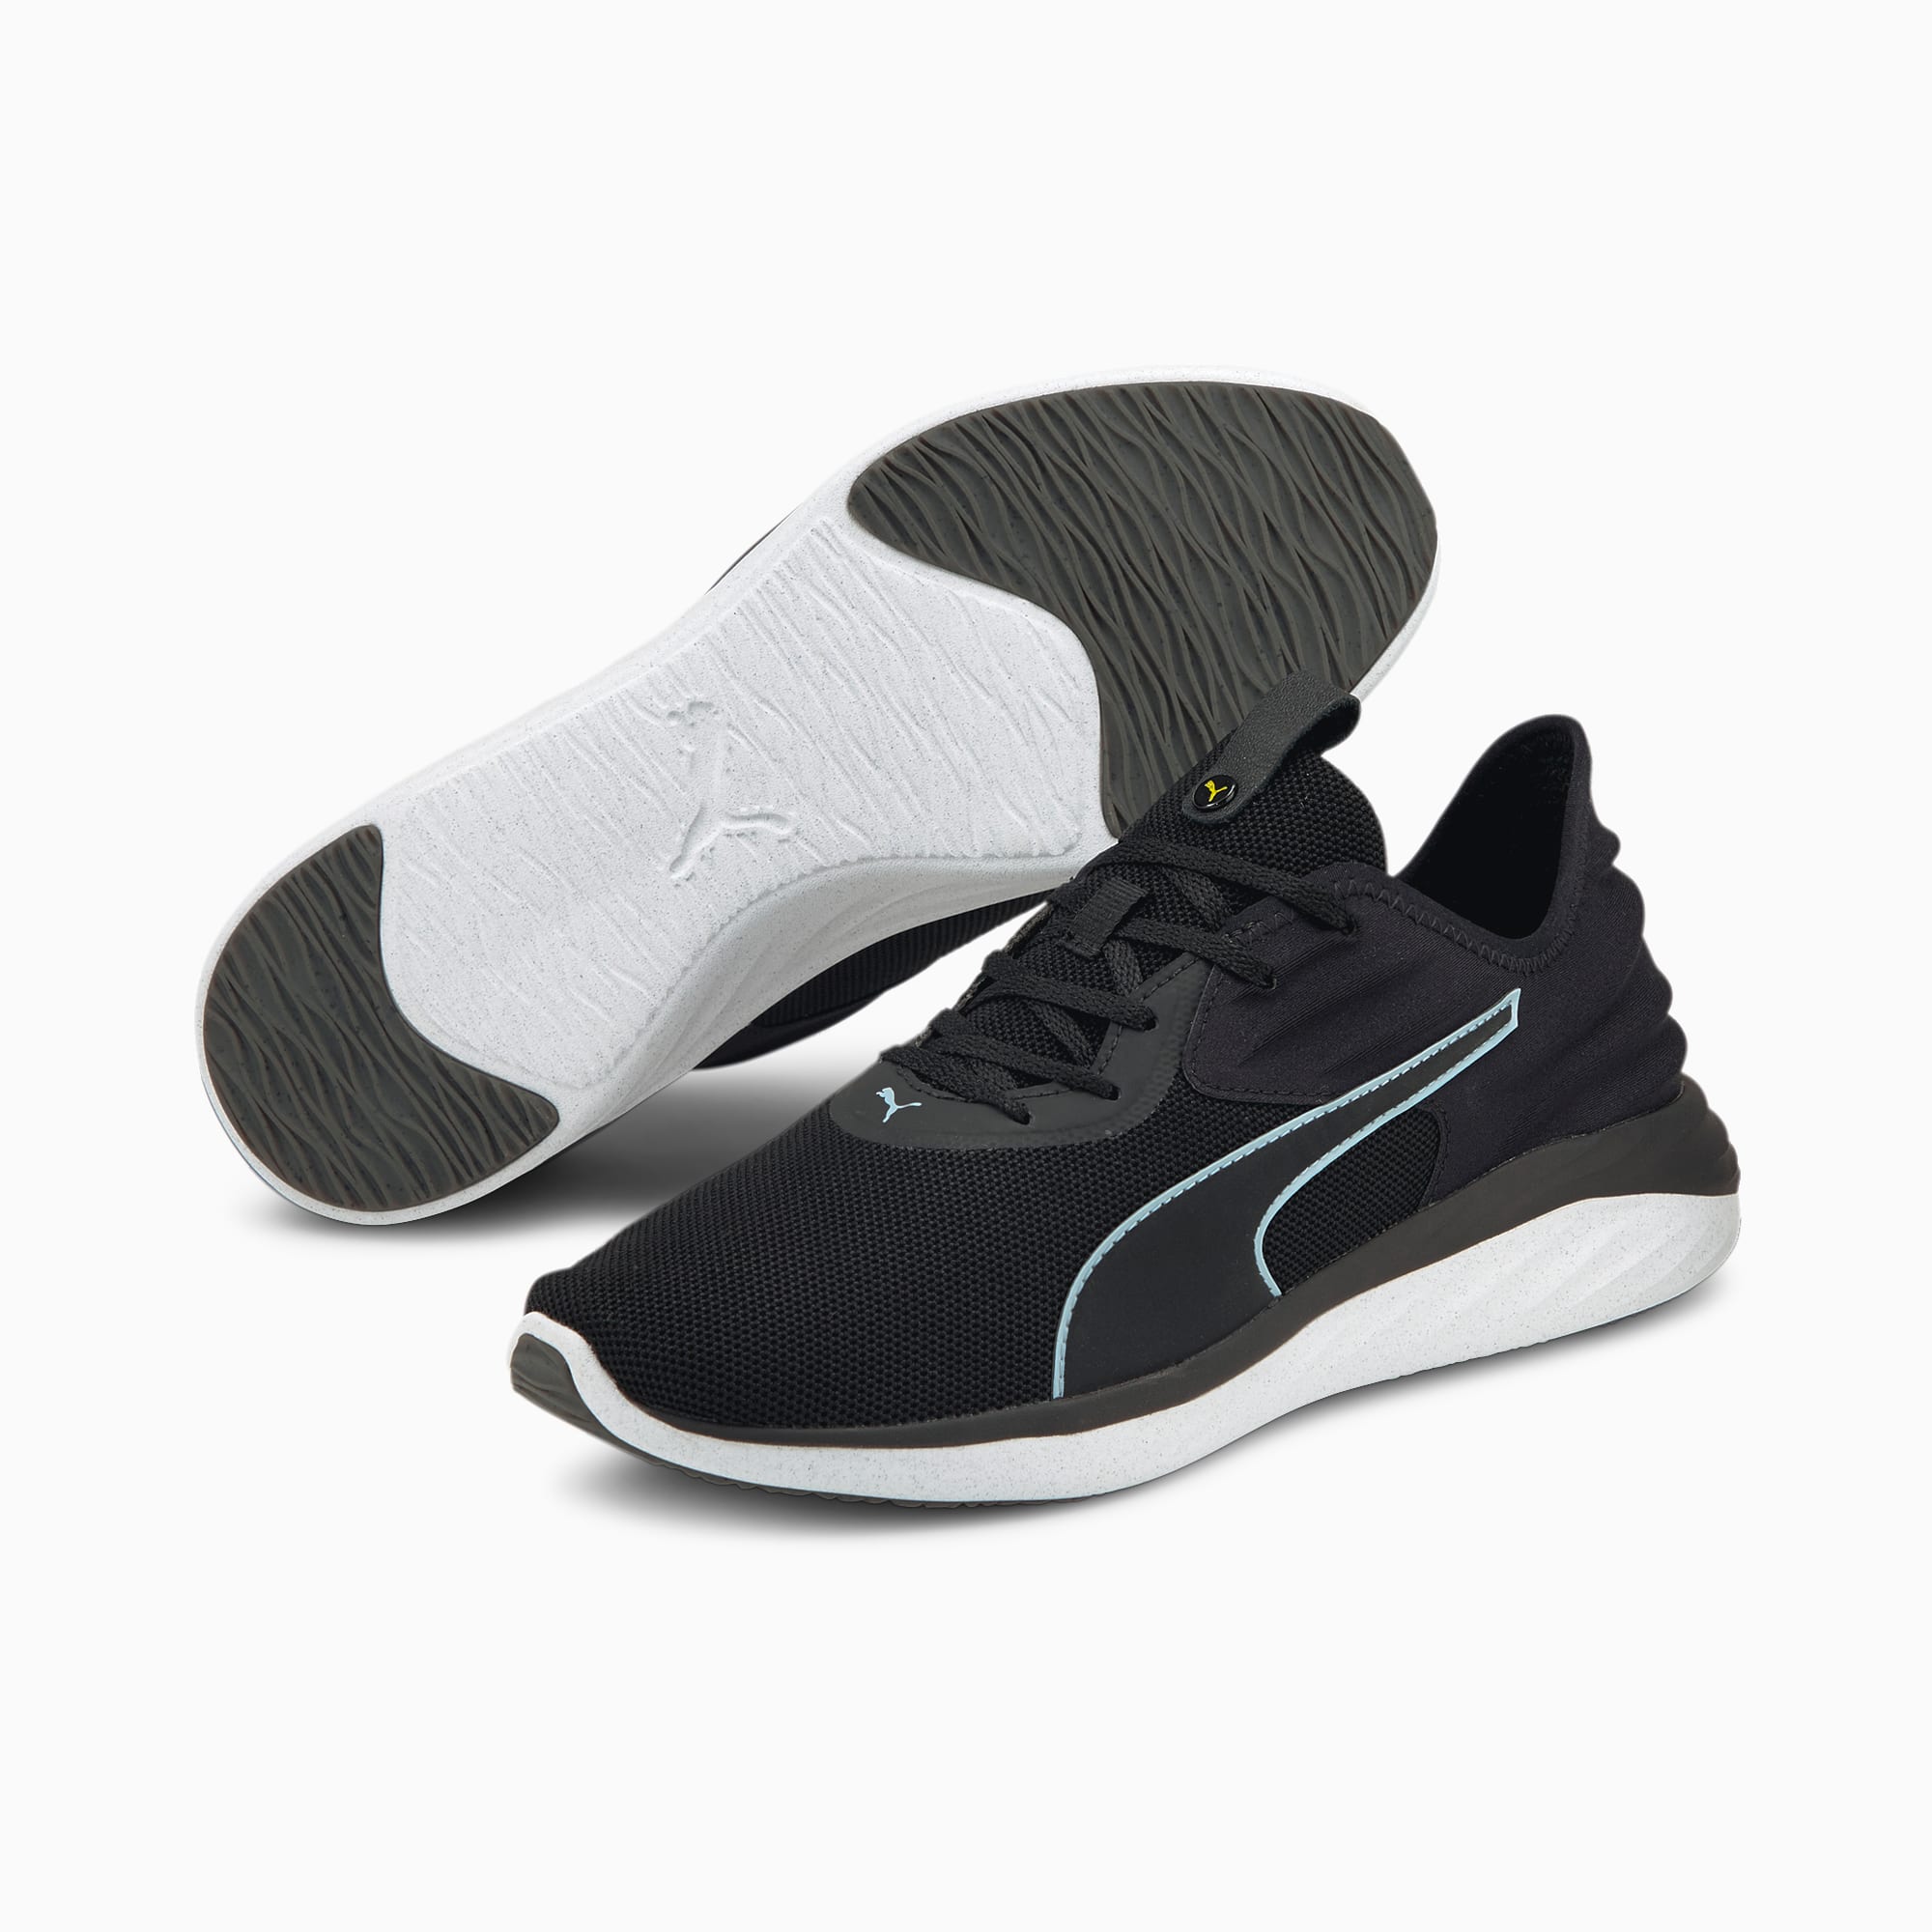 Mi Mesh Sports Shoe for Men - Black - EFH-60